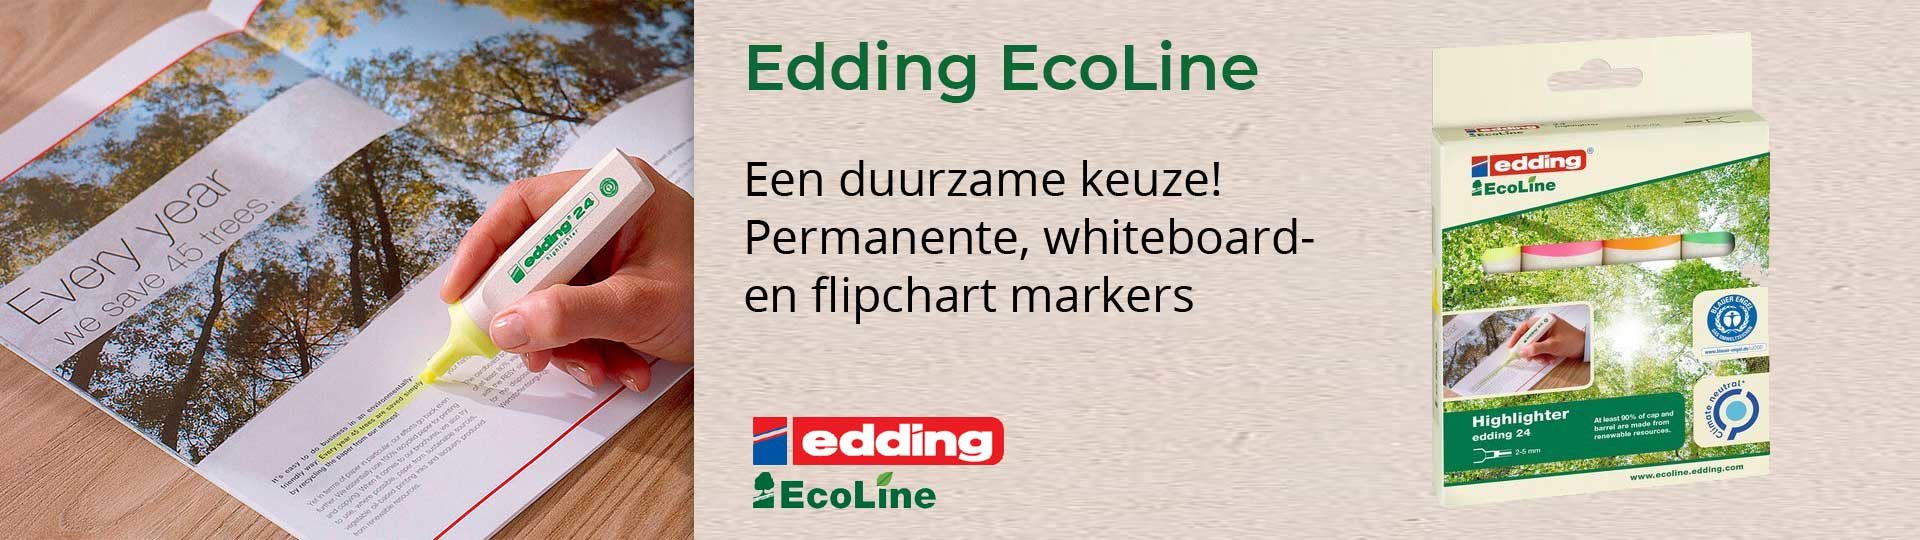 Edding Ecoline | oxeurope.nl